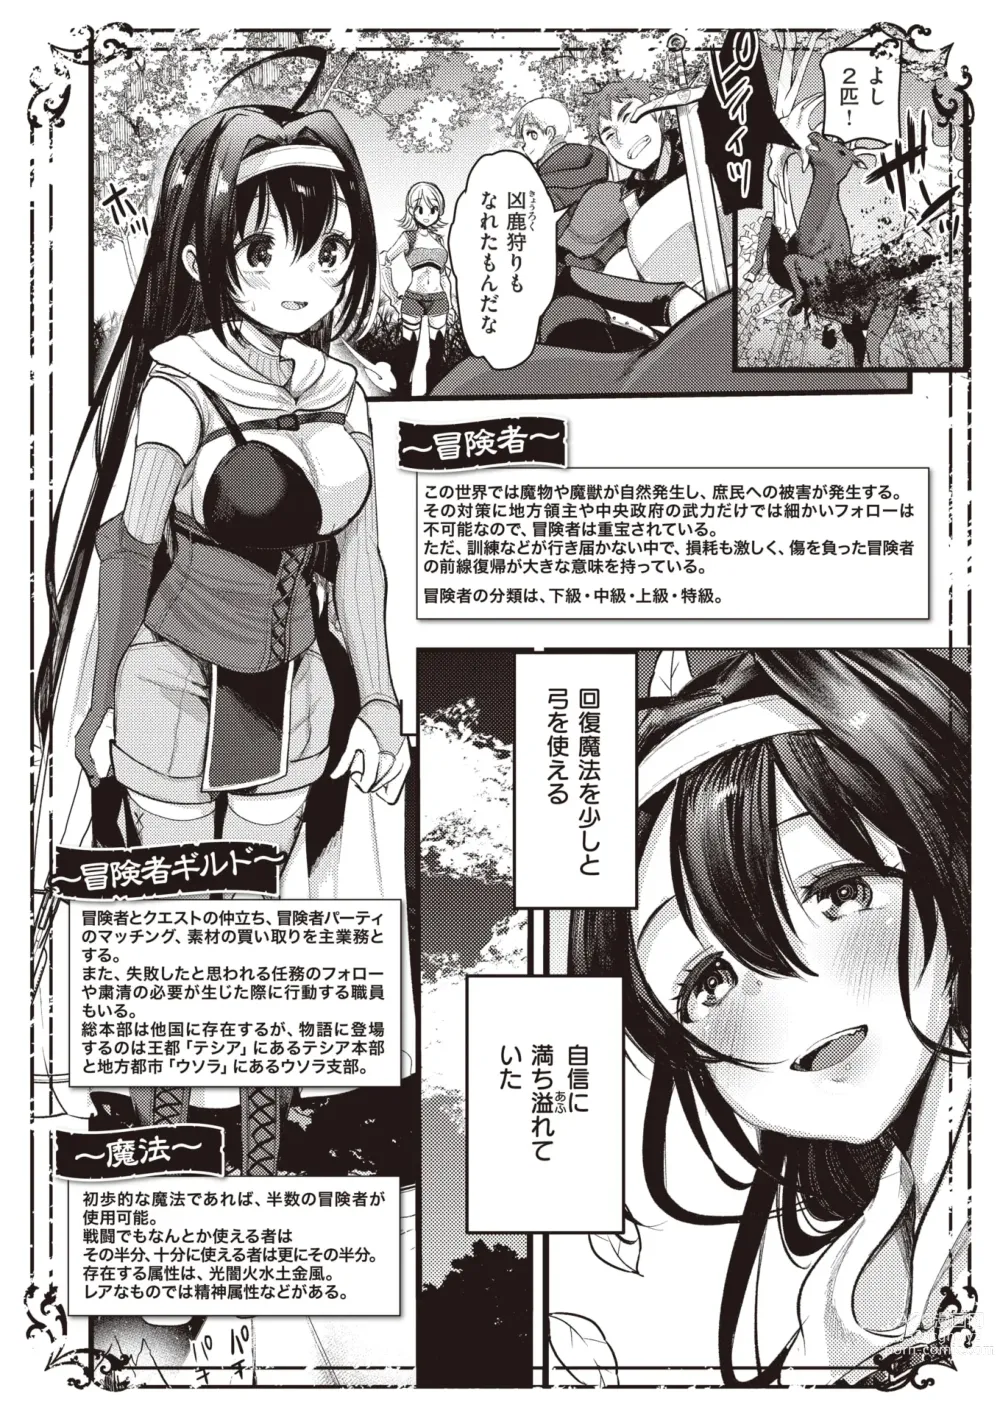 Page 70 of manga Isekai Rakuten Vol. 28